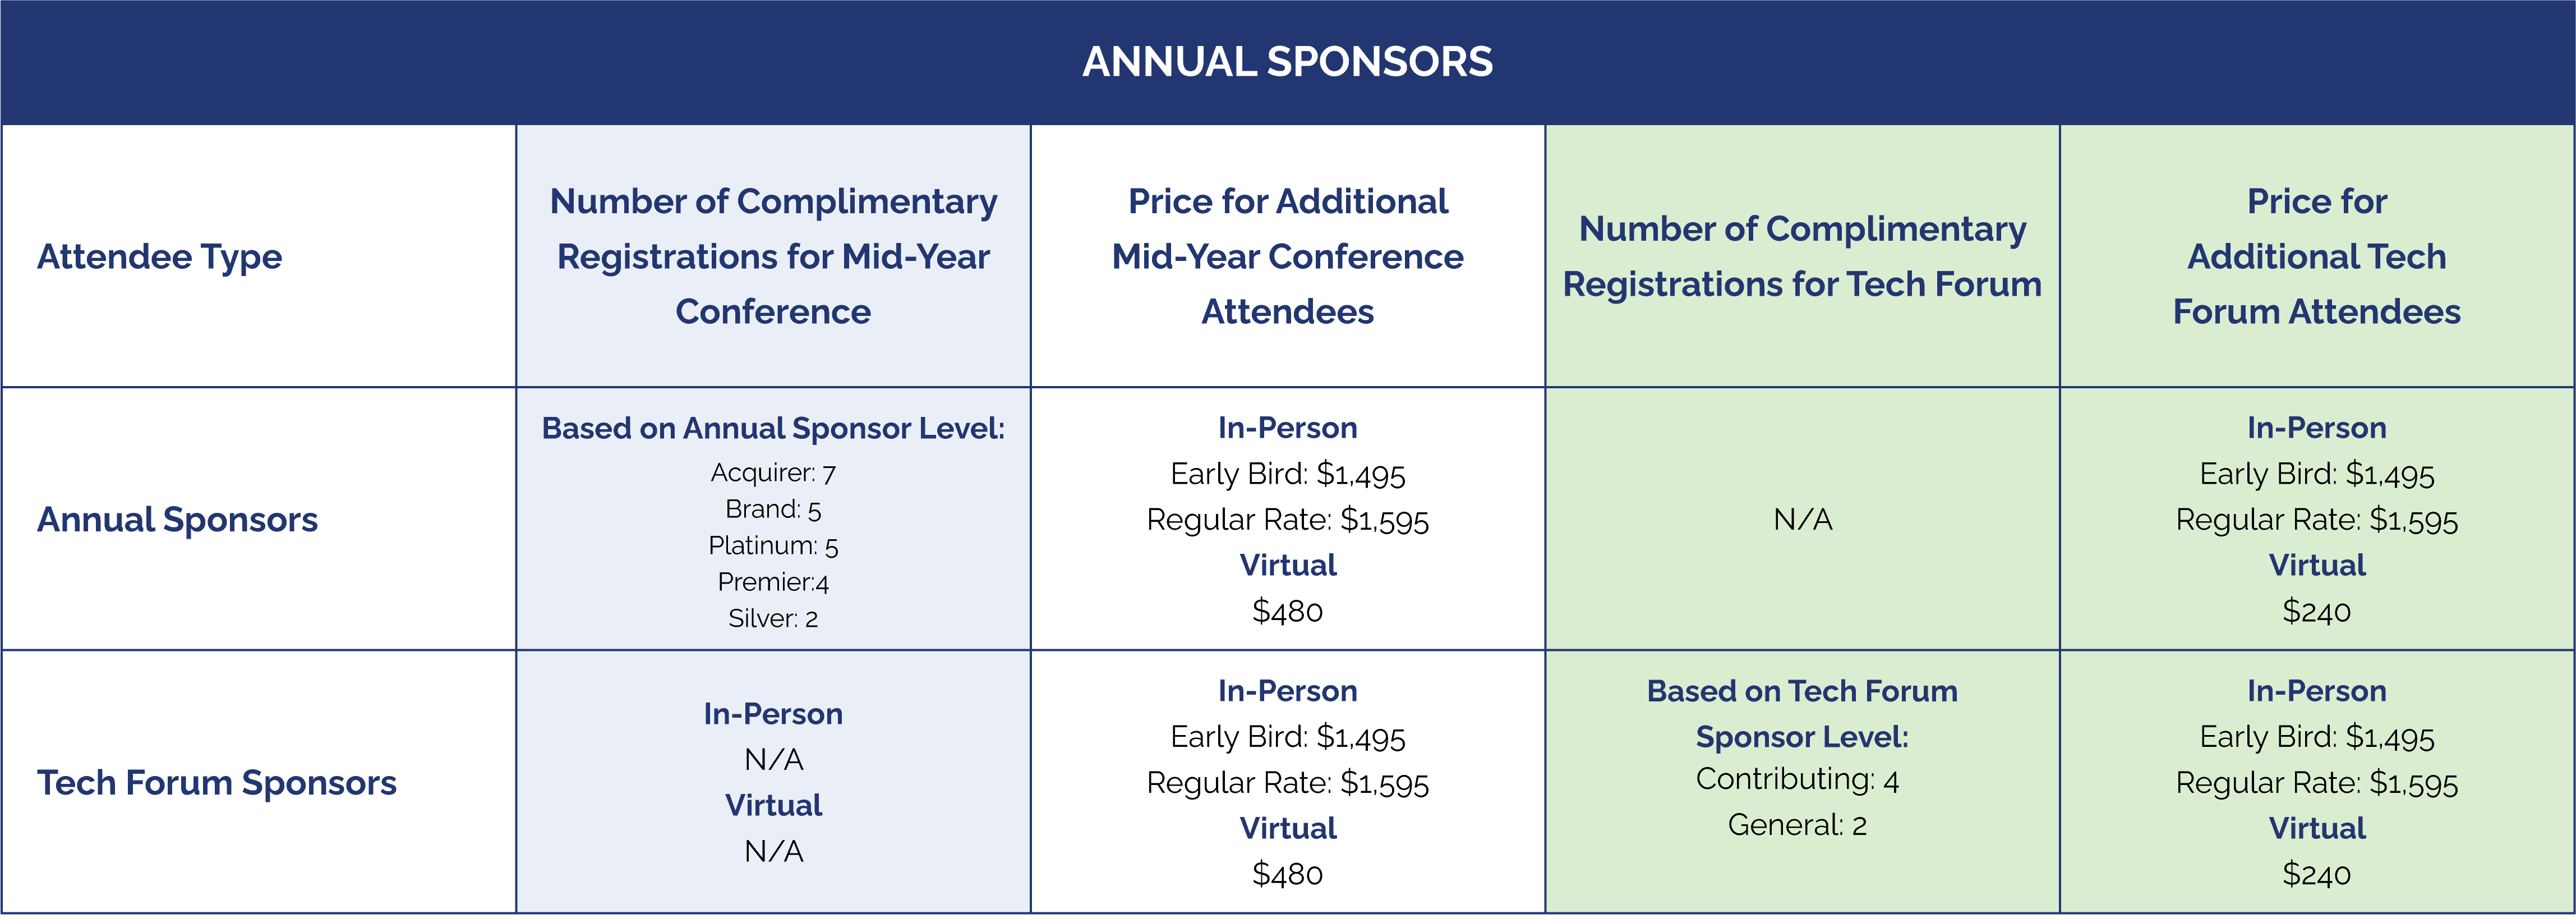 Annual Sponsors Registration Fees